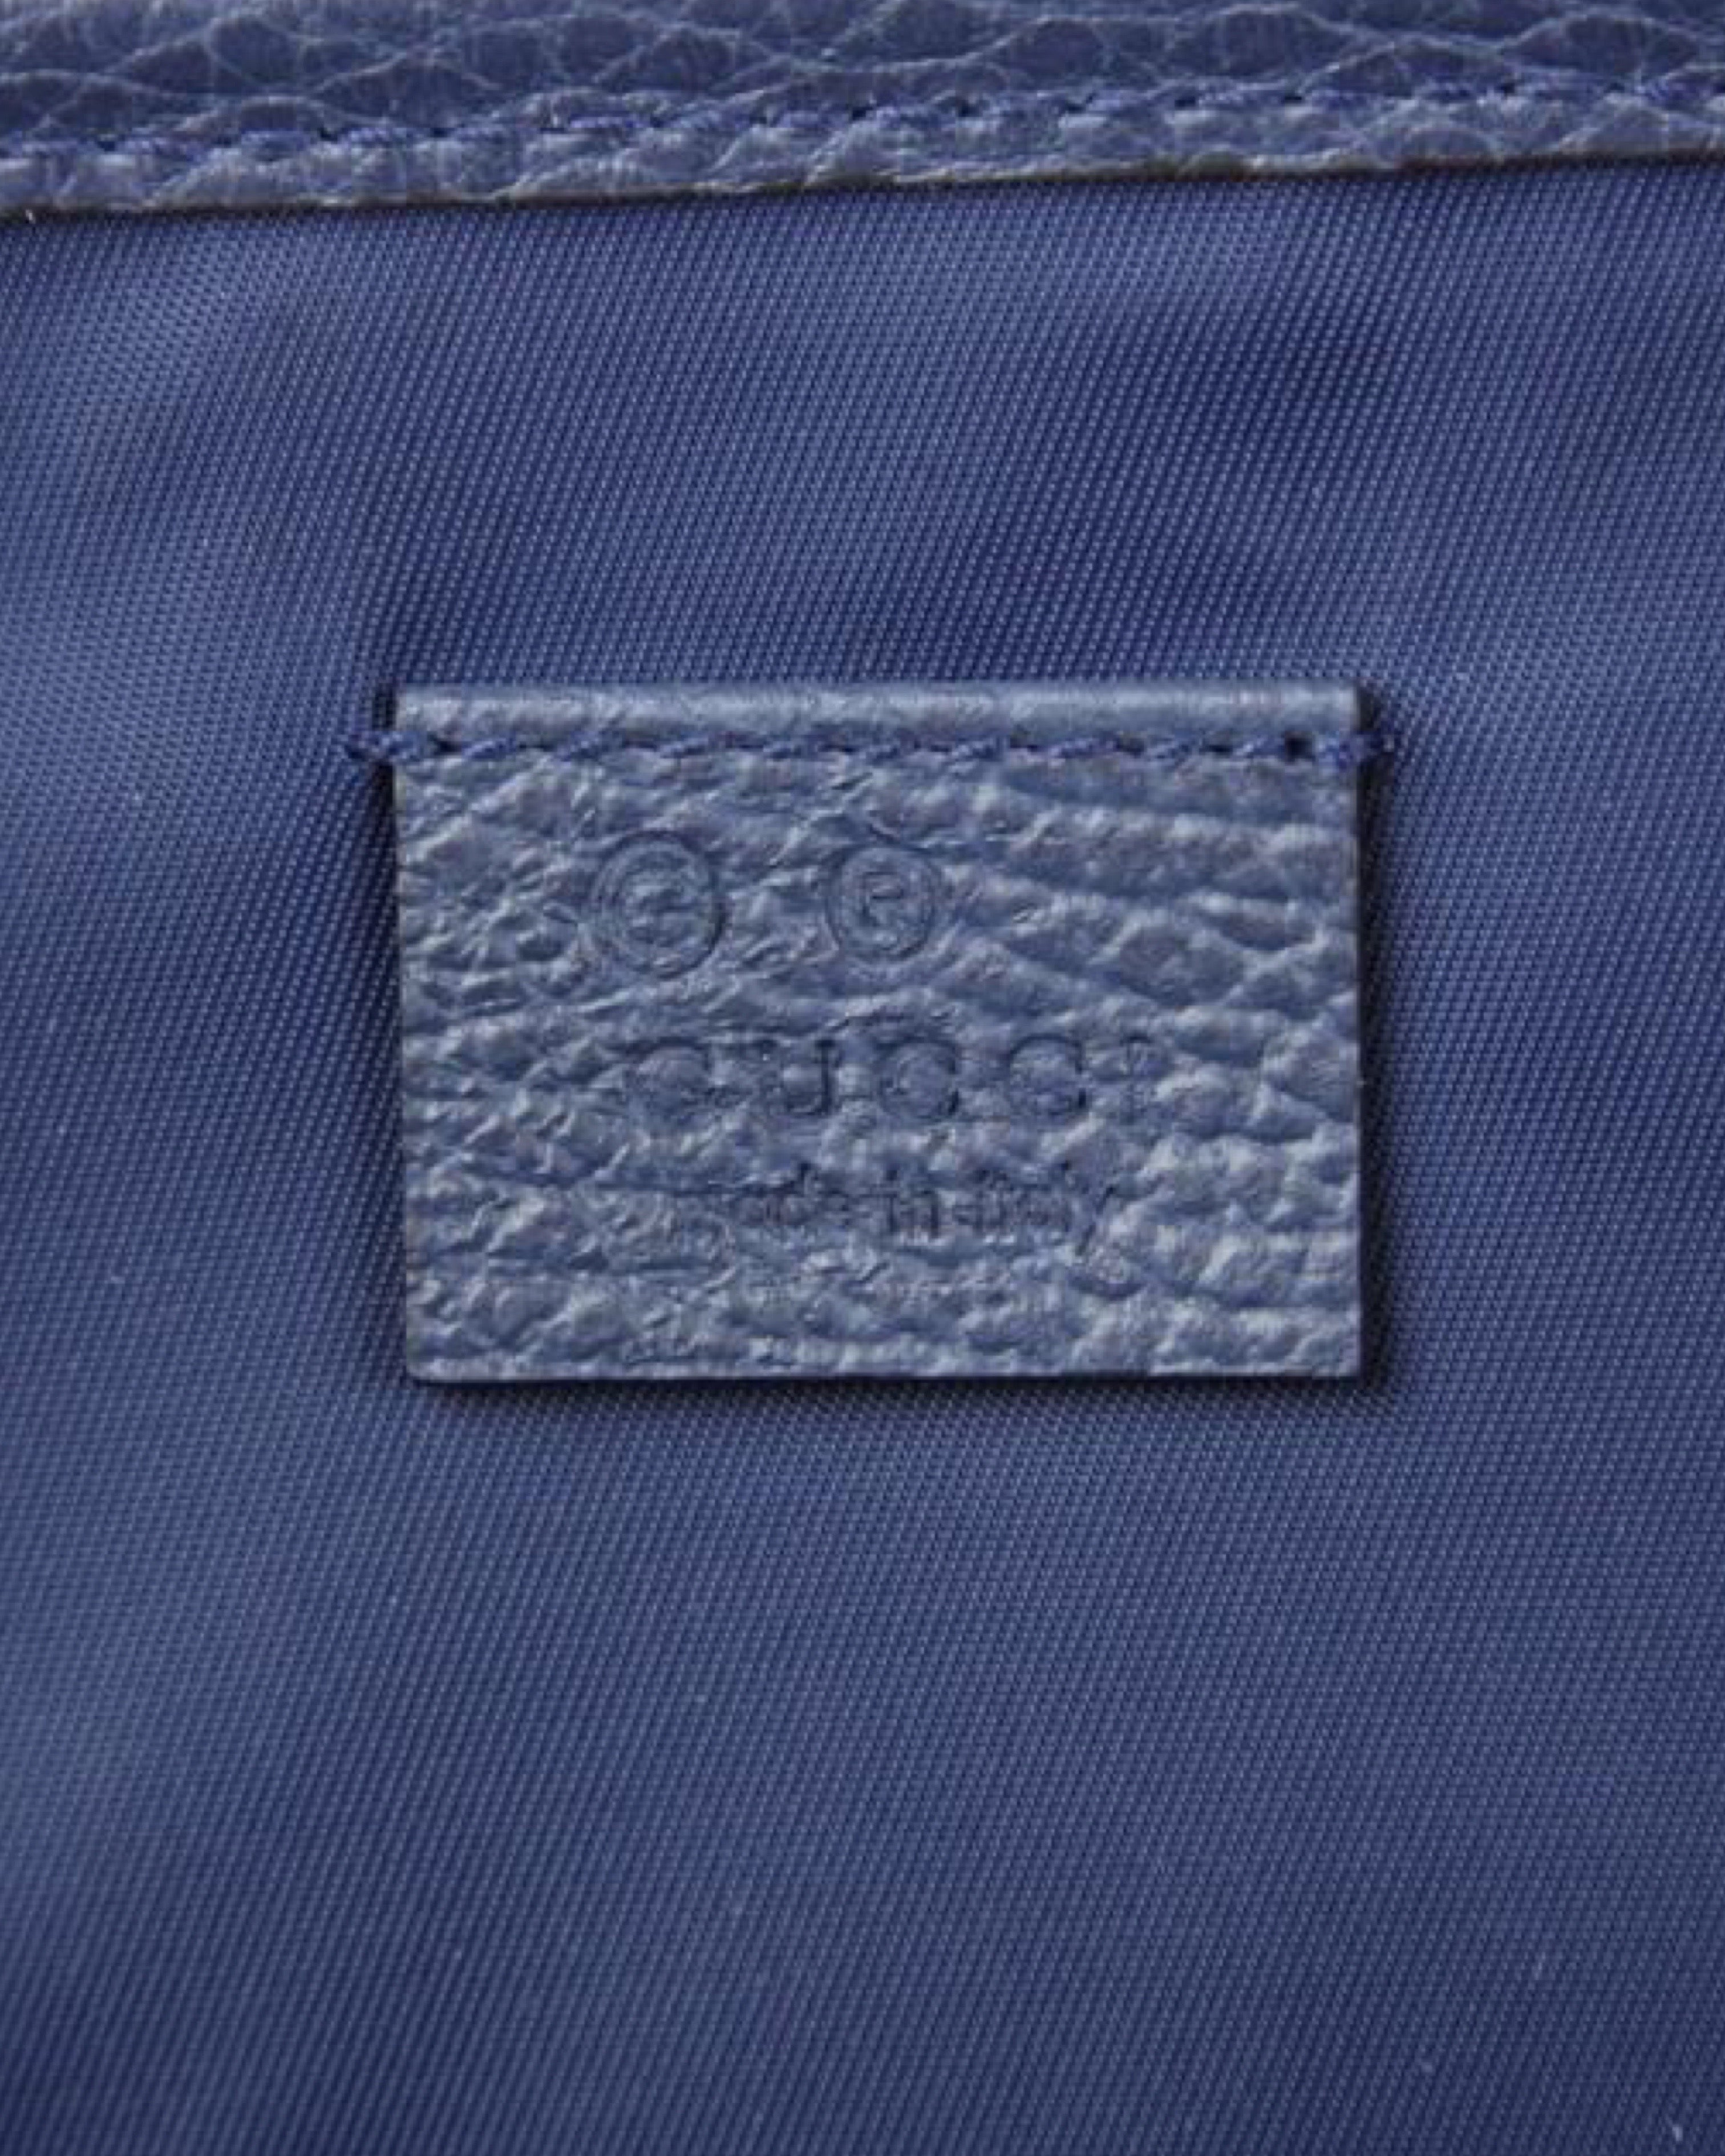 Gucci GG Canvas Diaper Bag - Neutrals - GUC1340800